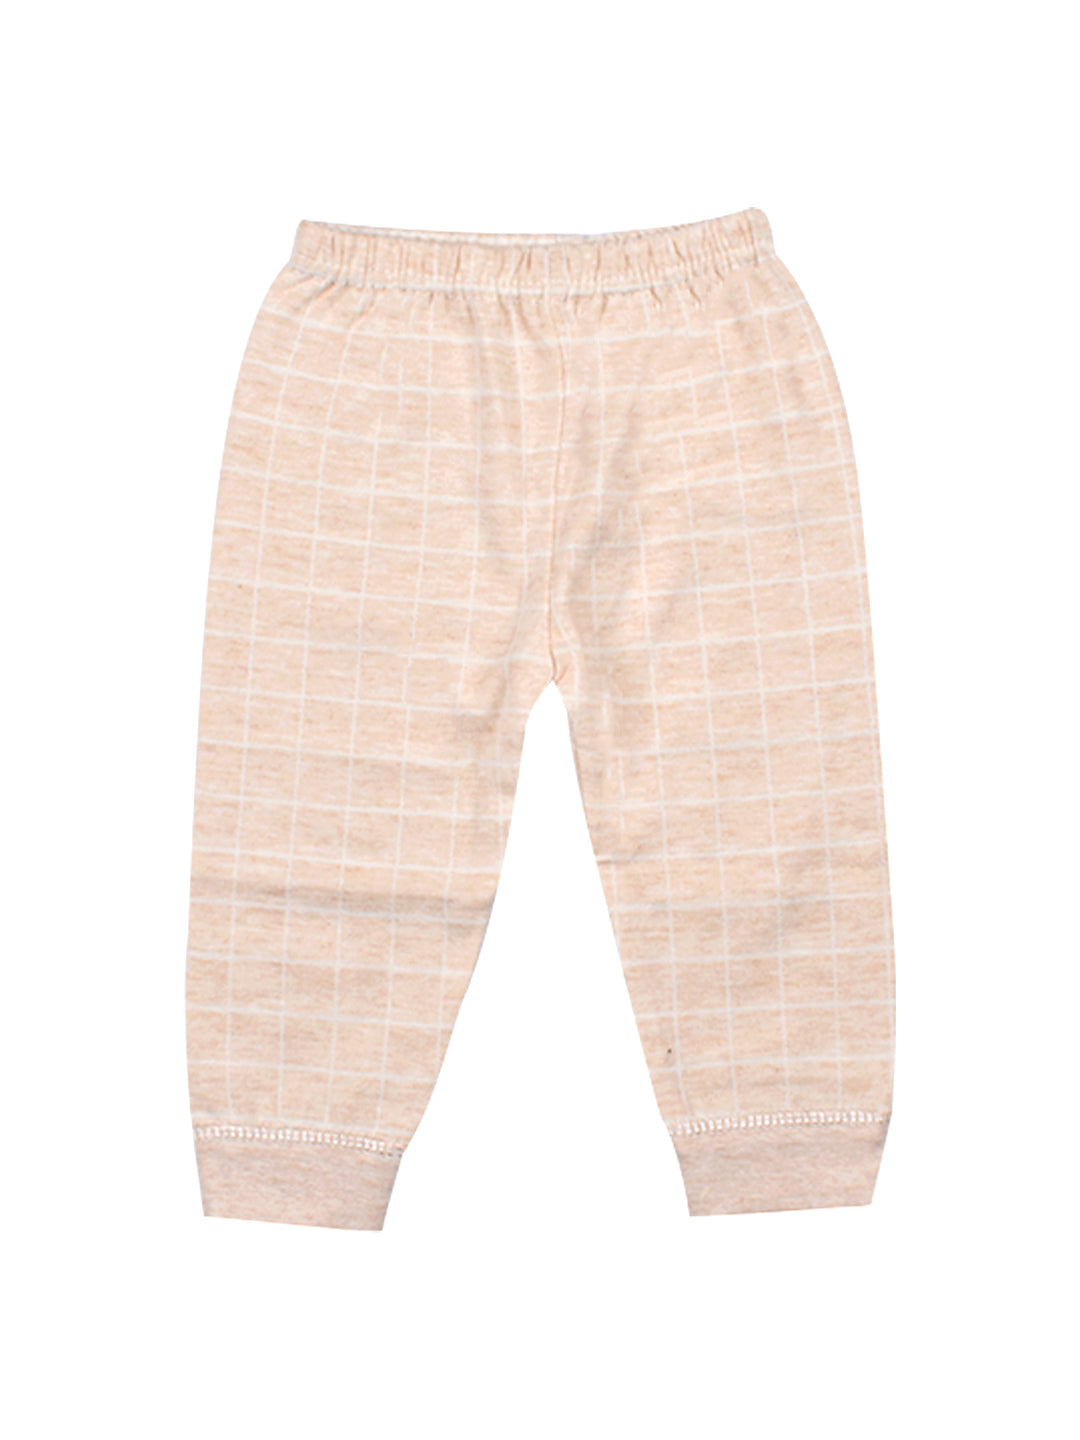 Baby's Warm Unisex Cotton Suit Set- 1Pajama and 1Shirt- Peach Check